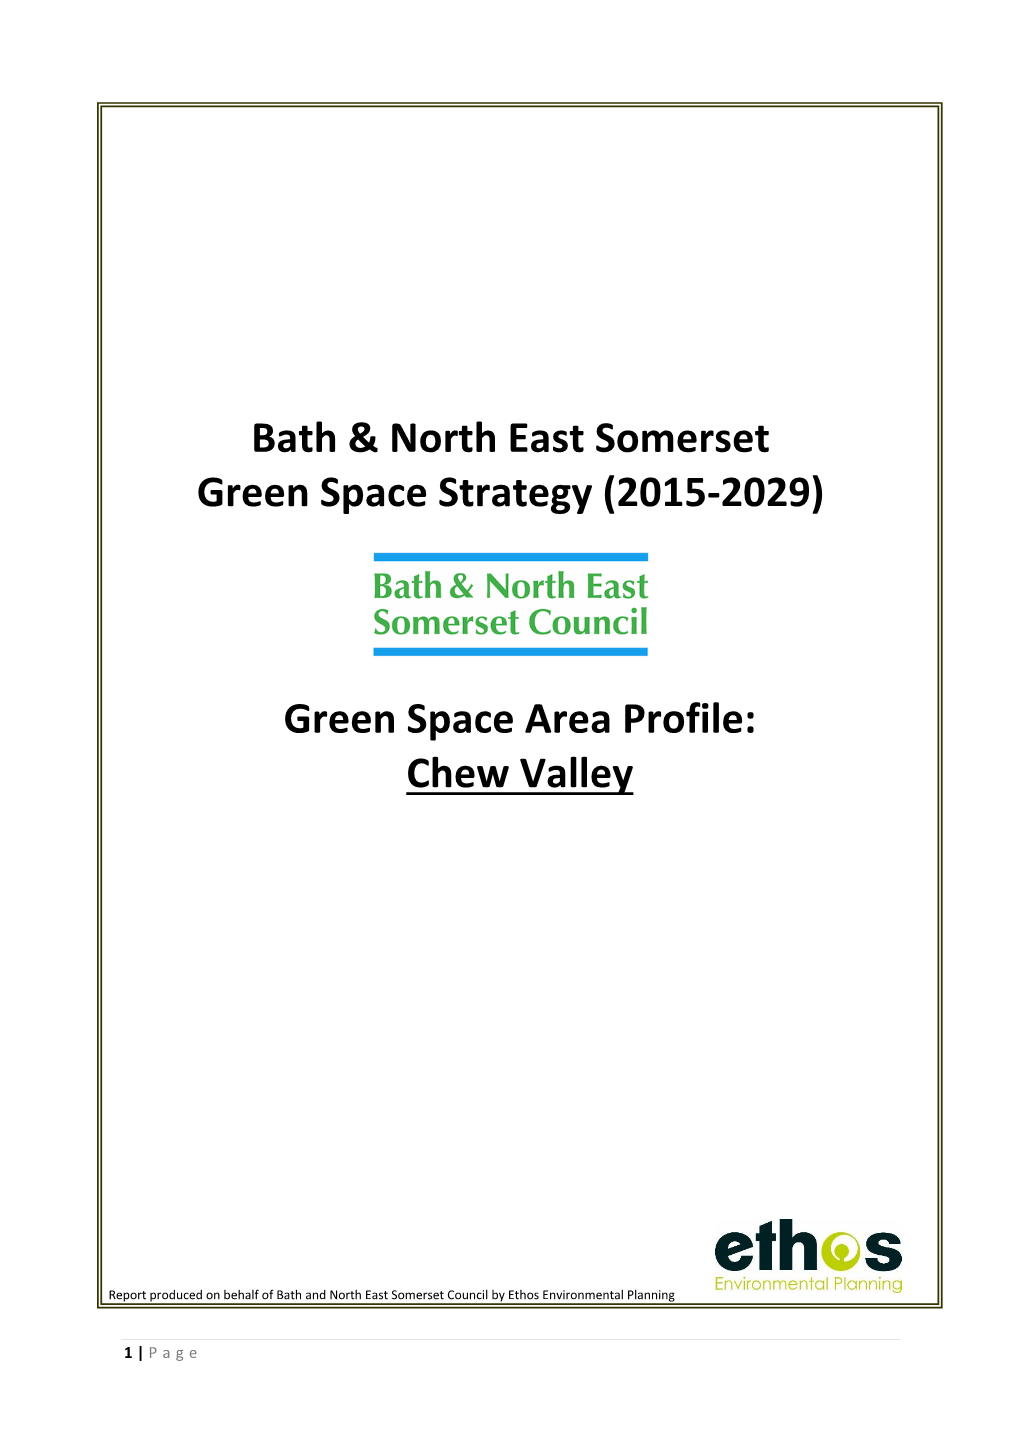 Green Space Area Profile: Chew Valley